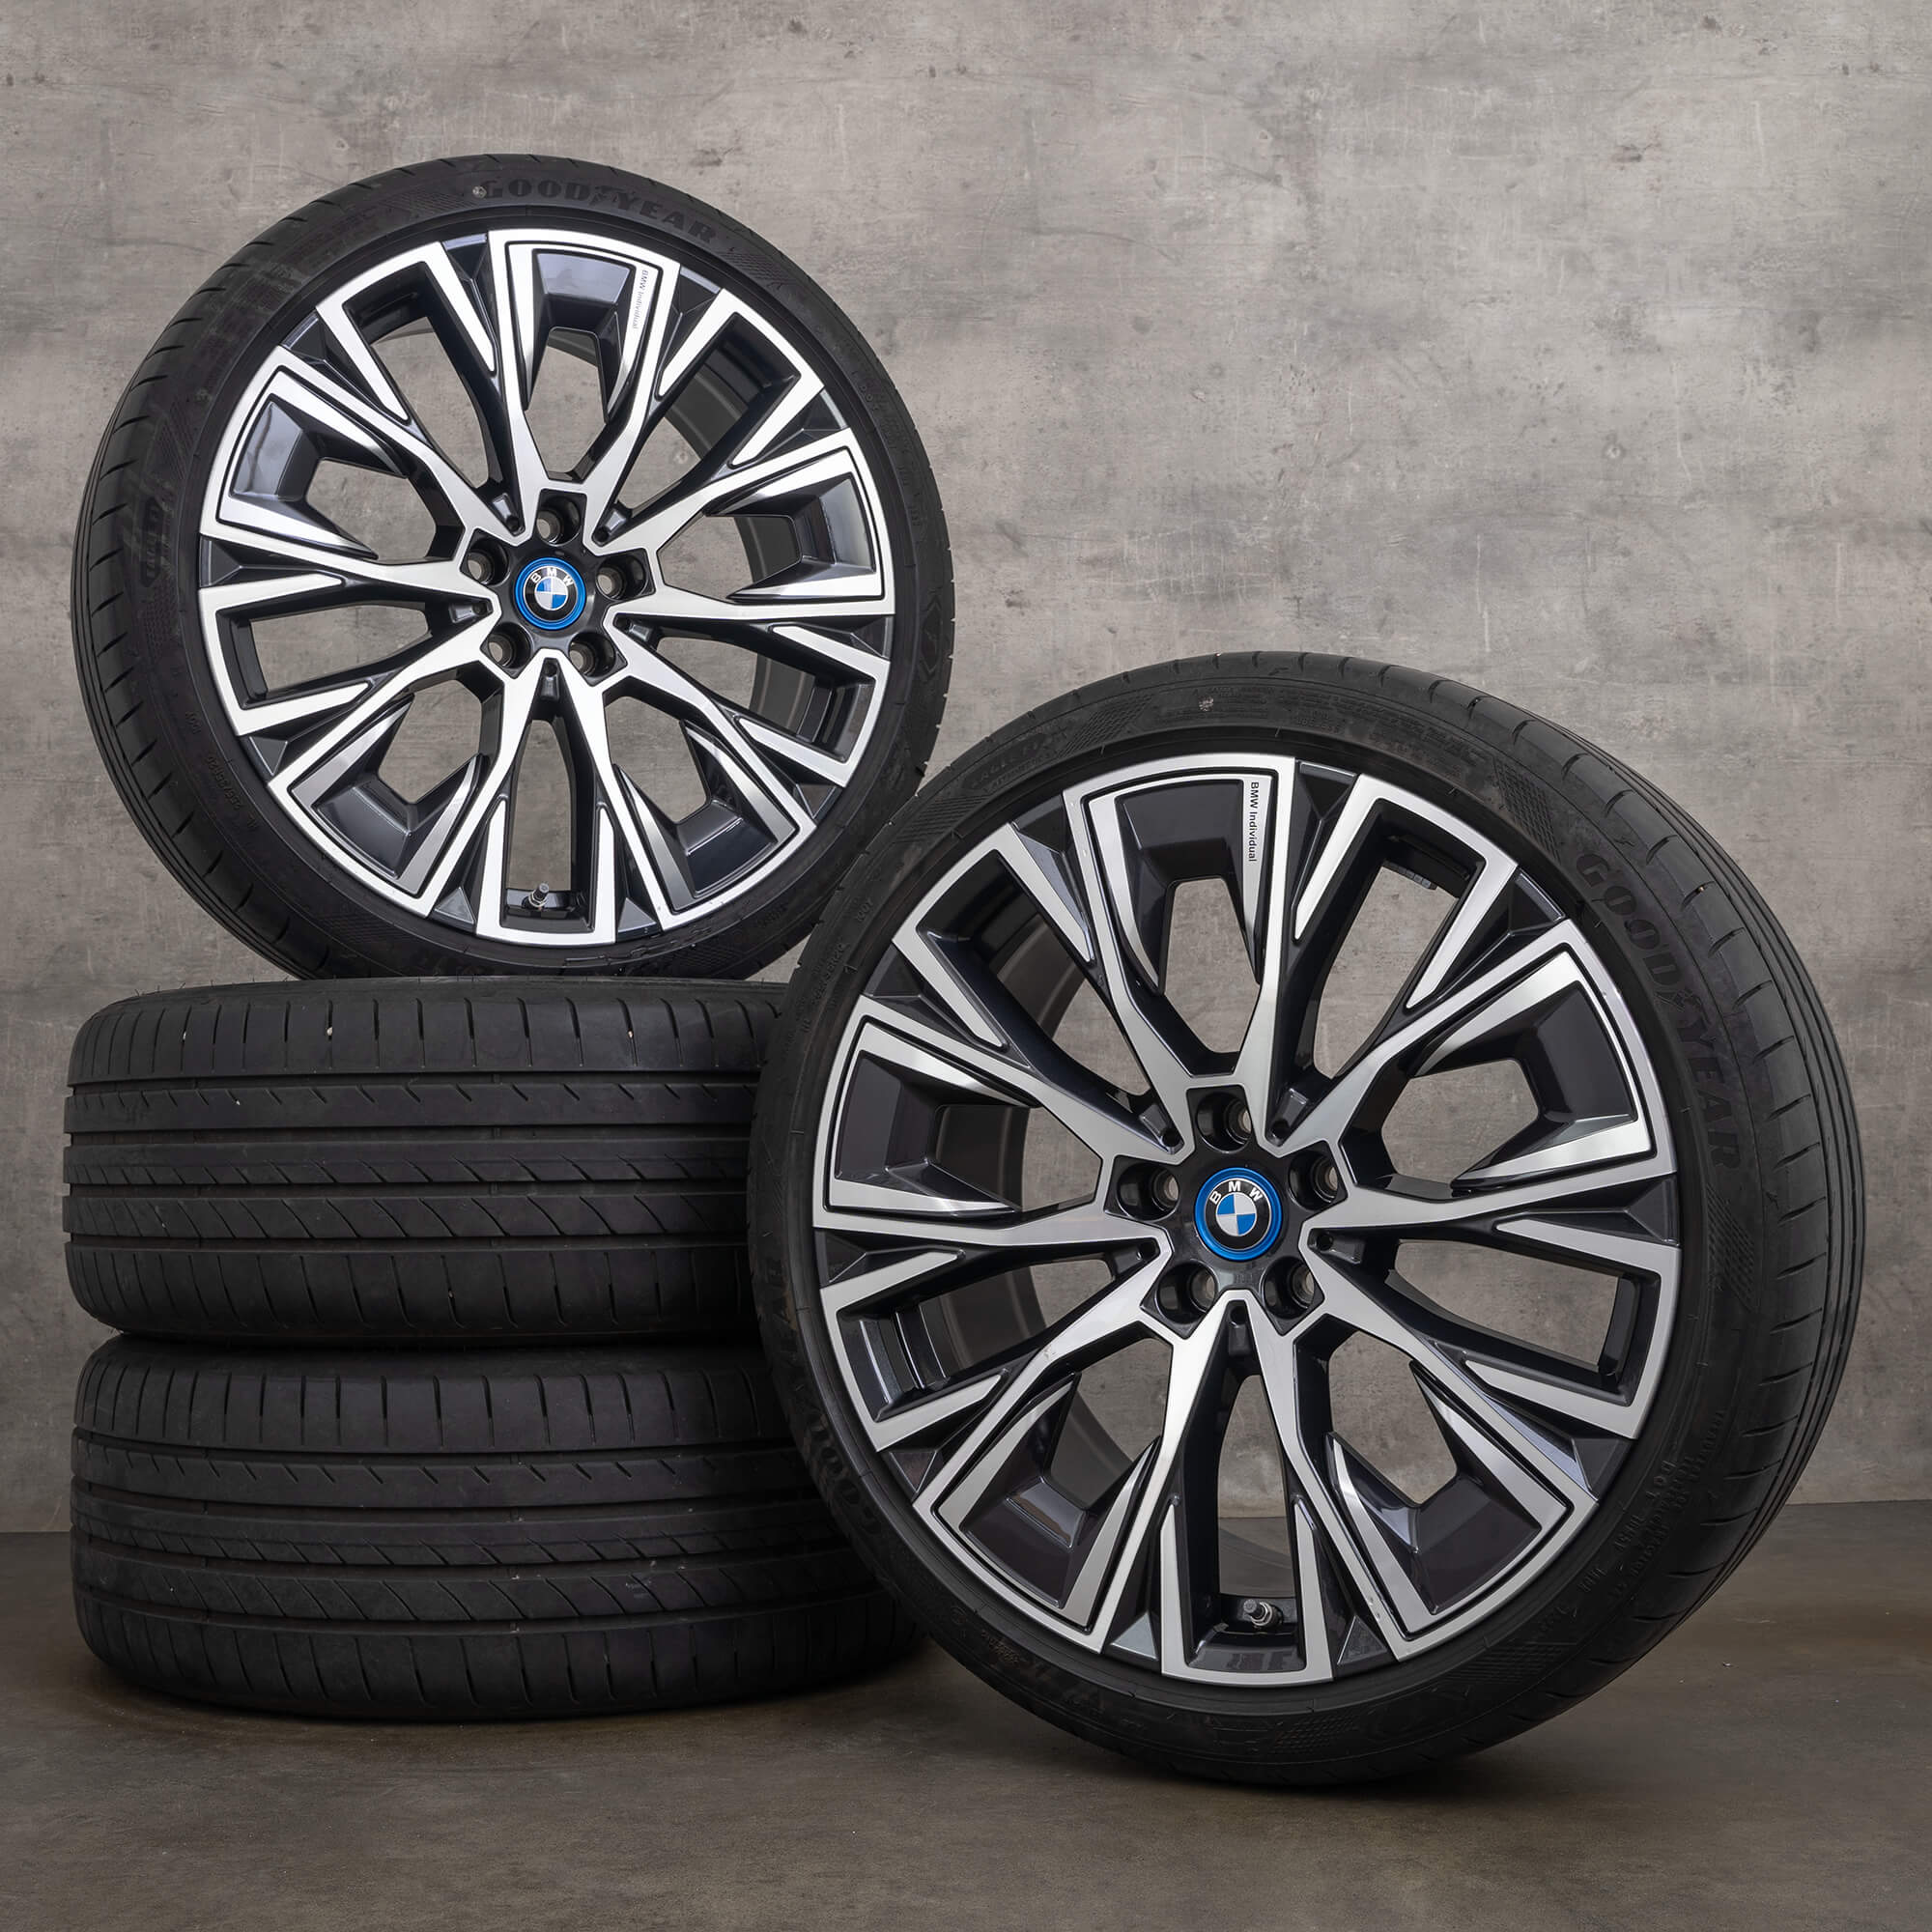 OEM BMW 4 Series Gran Coupe & i4 G26 20 inch summer wheels rims styling 862i 8747310 8747311 black high gloss